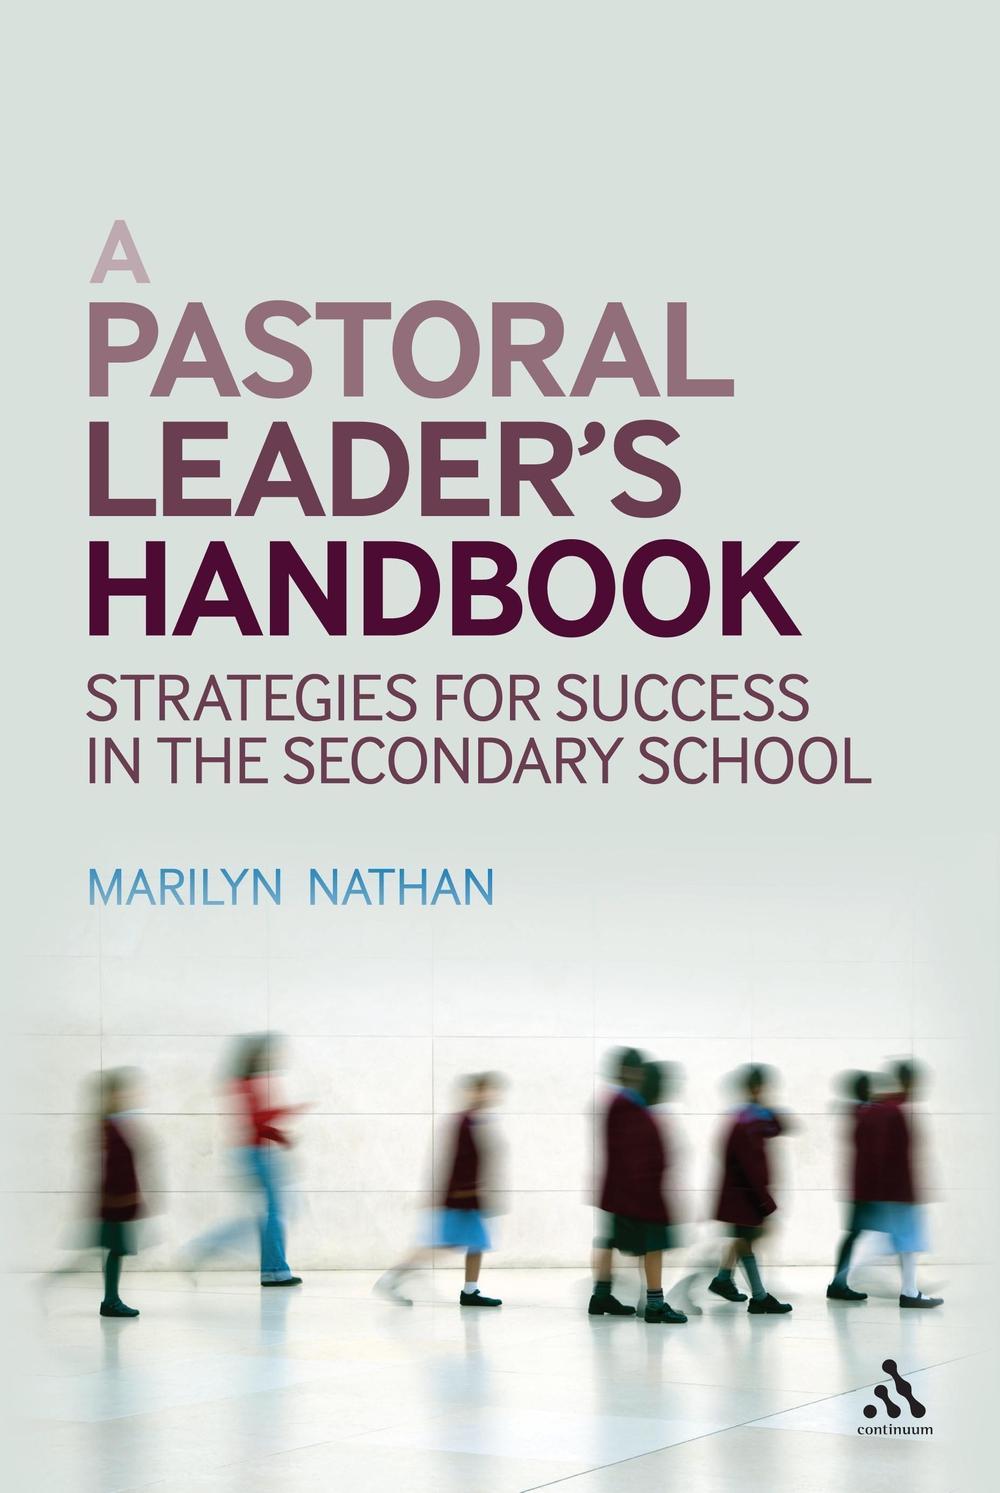 Pastoral Leader's Handbook